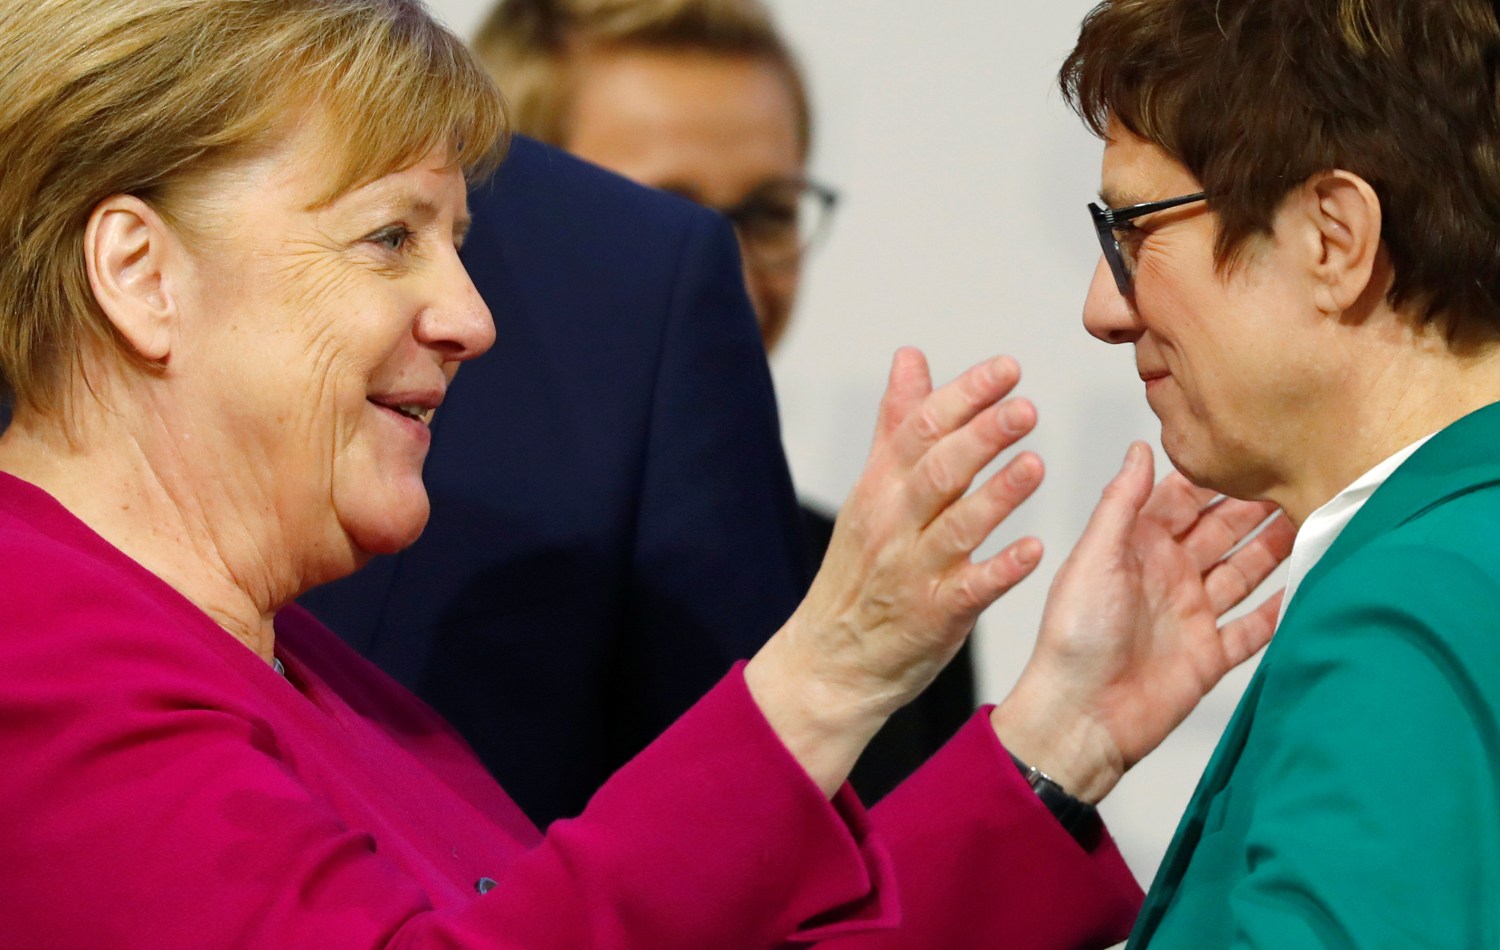 New CDU leader Annegret Kramp-Karrenbauer and German Chancellor Angela Merkel bid farewell to each other during the closing of Christian Democratic Union (CDU) party congress in Hamburg, Germany, December 8, 2018. REUTERS/Kai Pfaffenbach - RC158EEE7F30